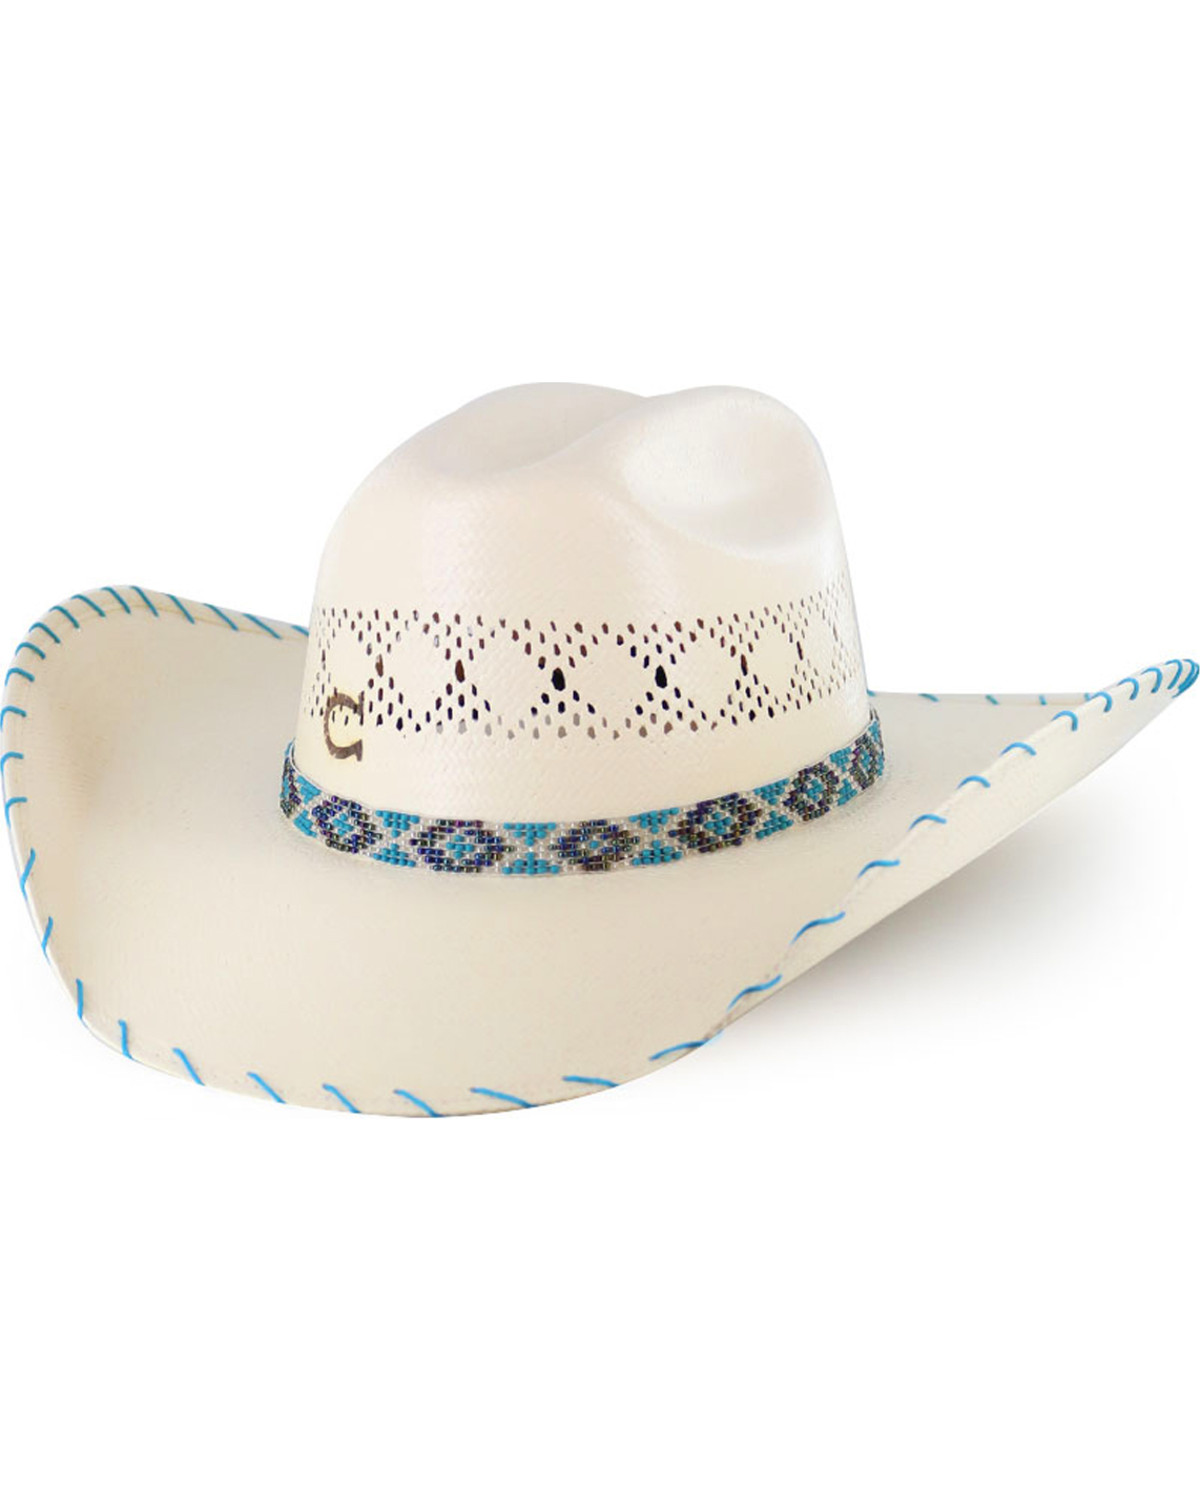 Charlie 1 Horse Girls' Straw Cowboy Hat